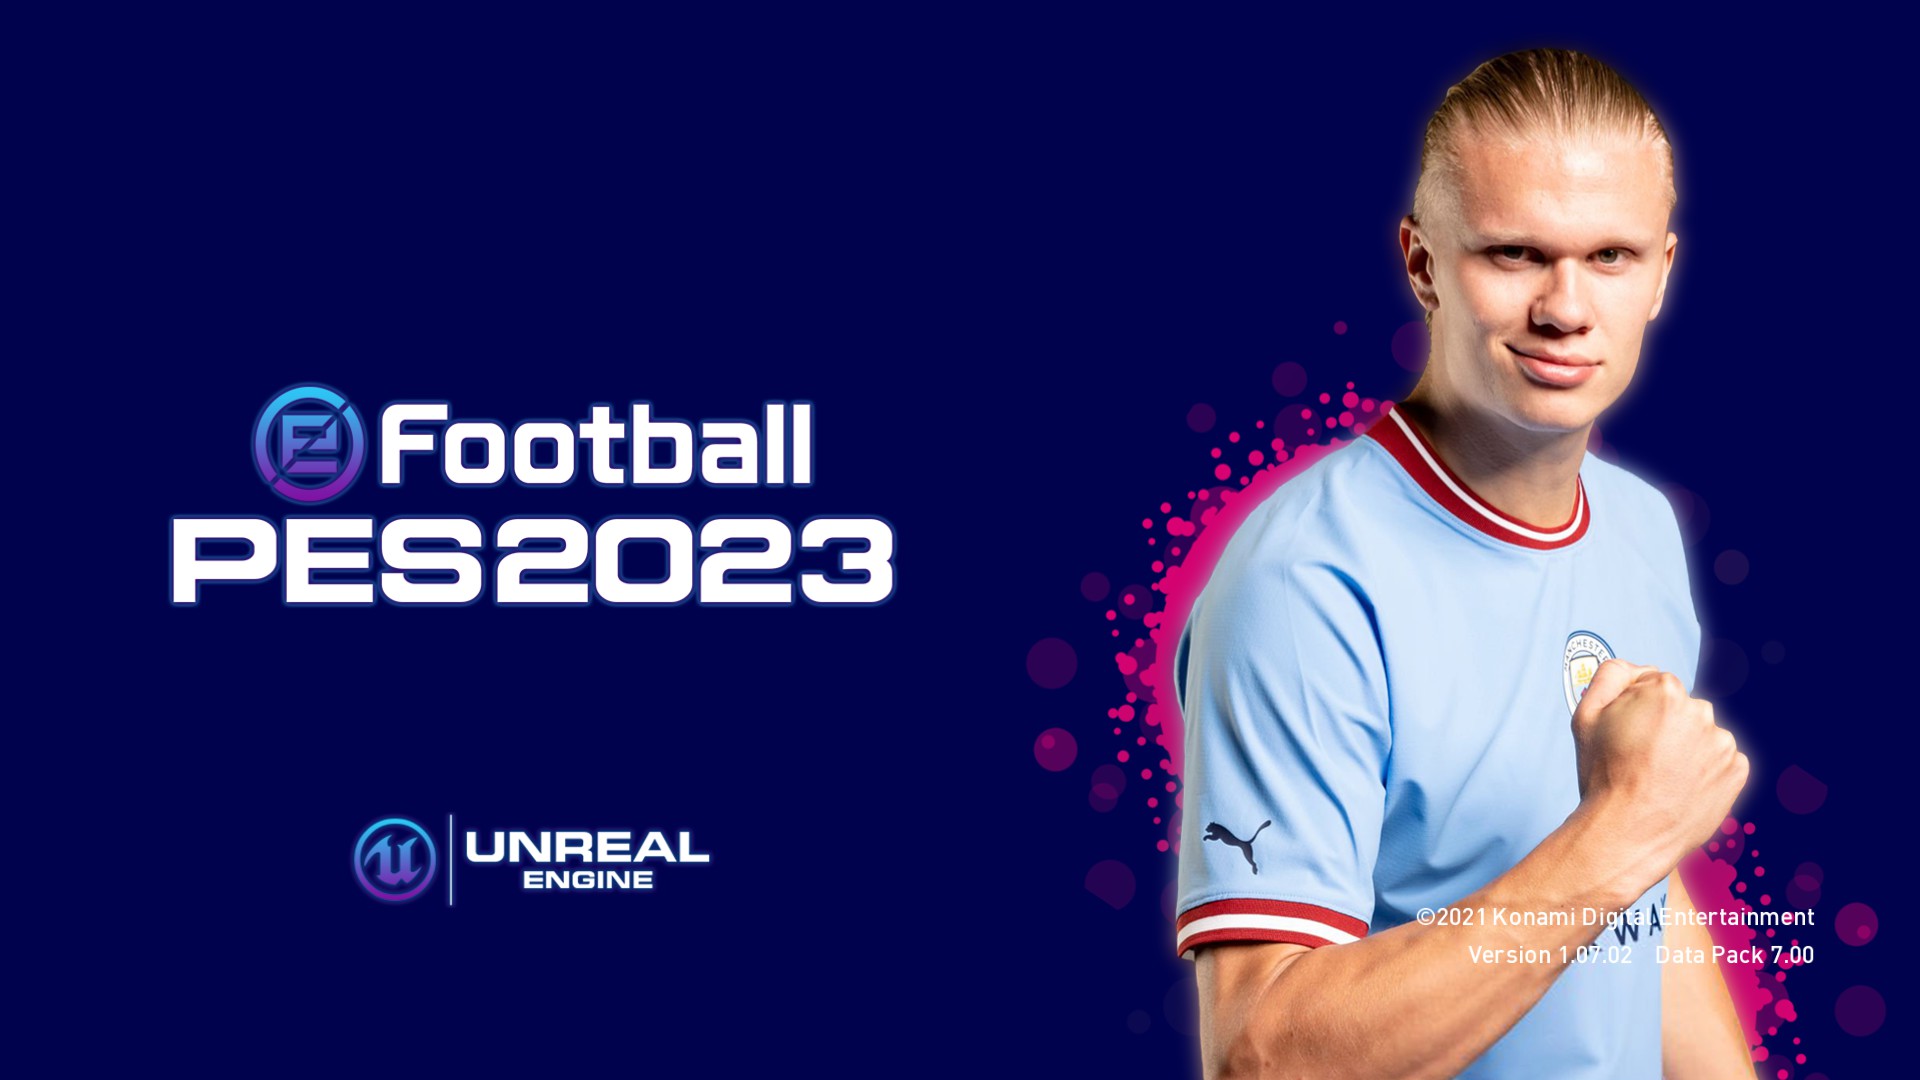  Download PES 2021 Option Files eFootball - 2023-24 Season